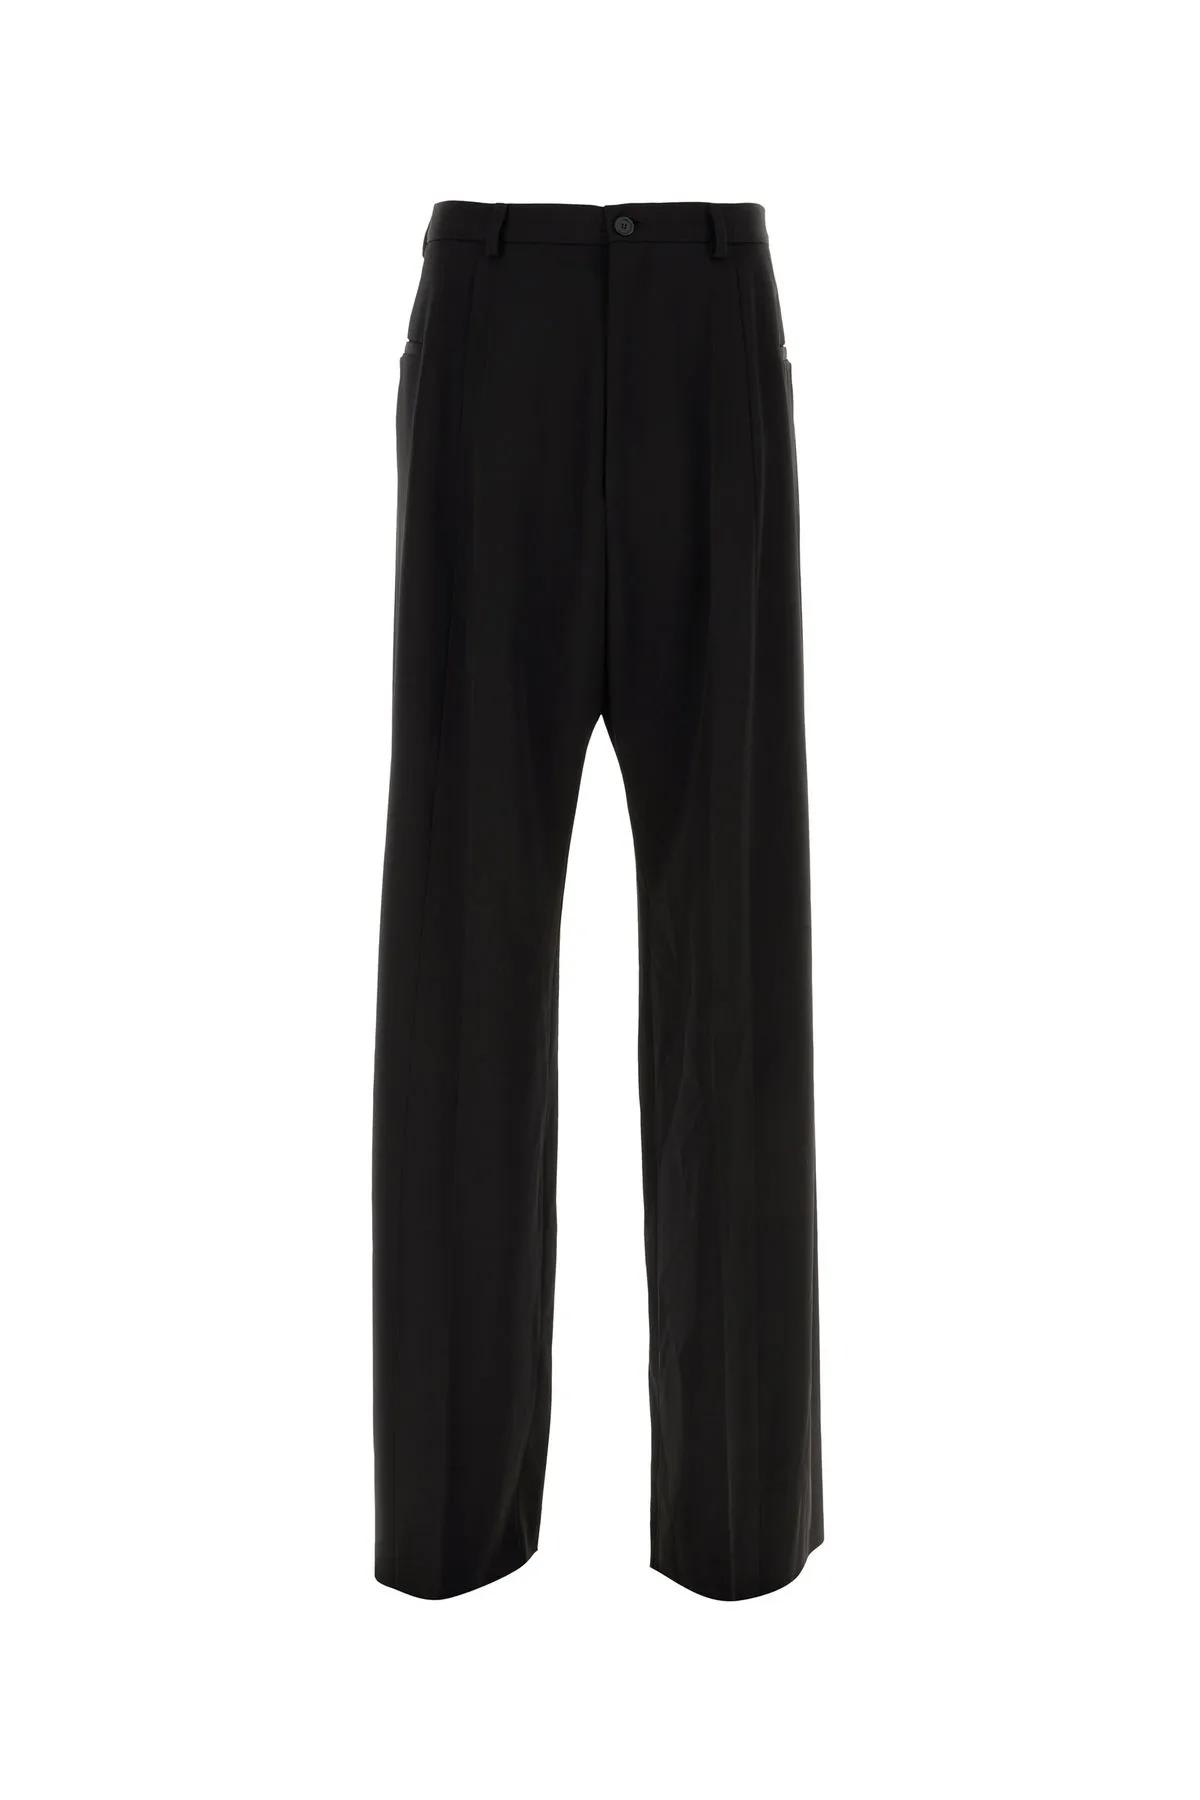 Balenciaga Black Wool Wide-leg Pant